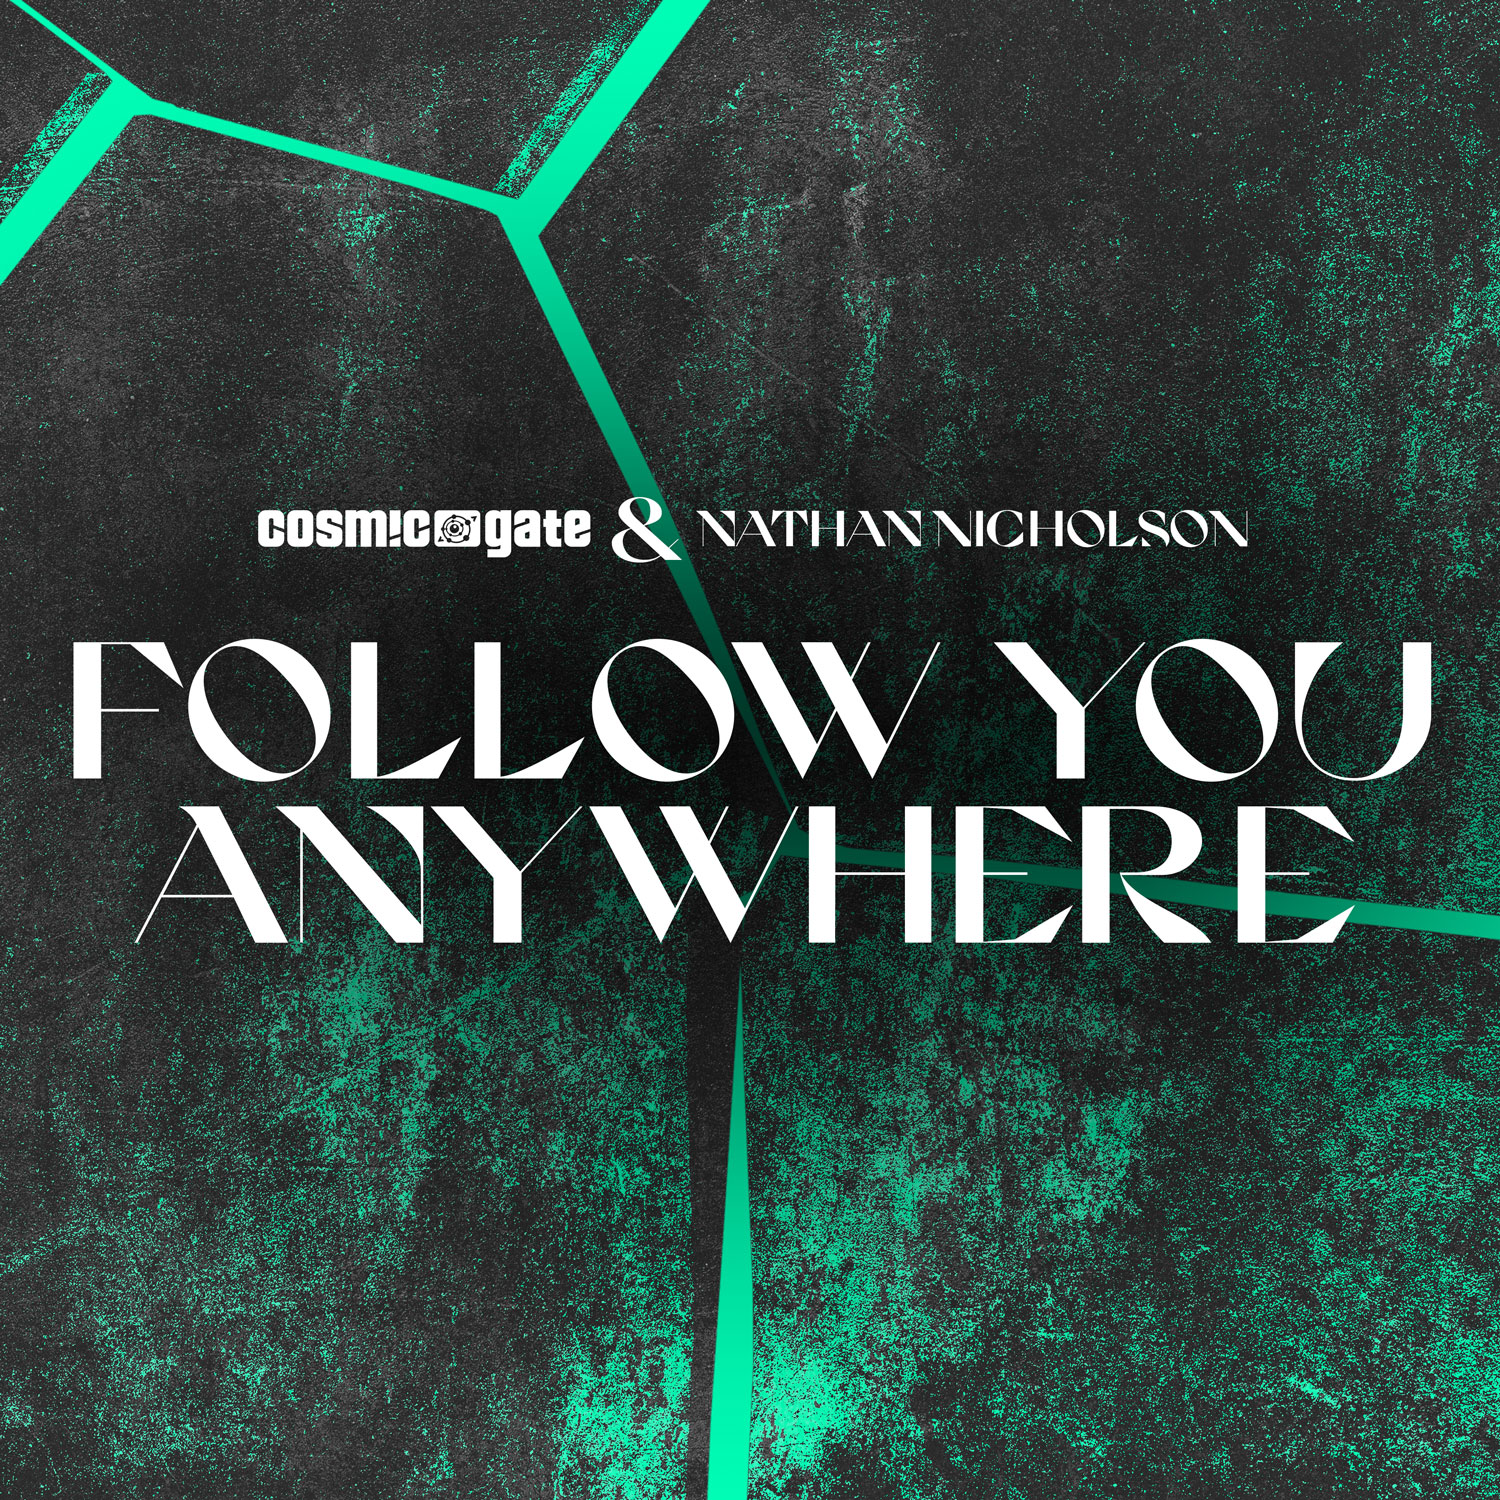 Cosmic Gate & Nathan Nicholson – Follow You Anywhere